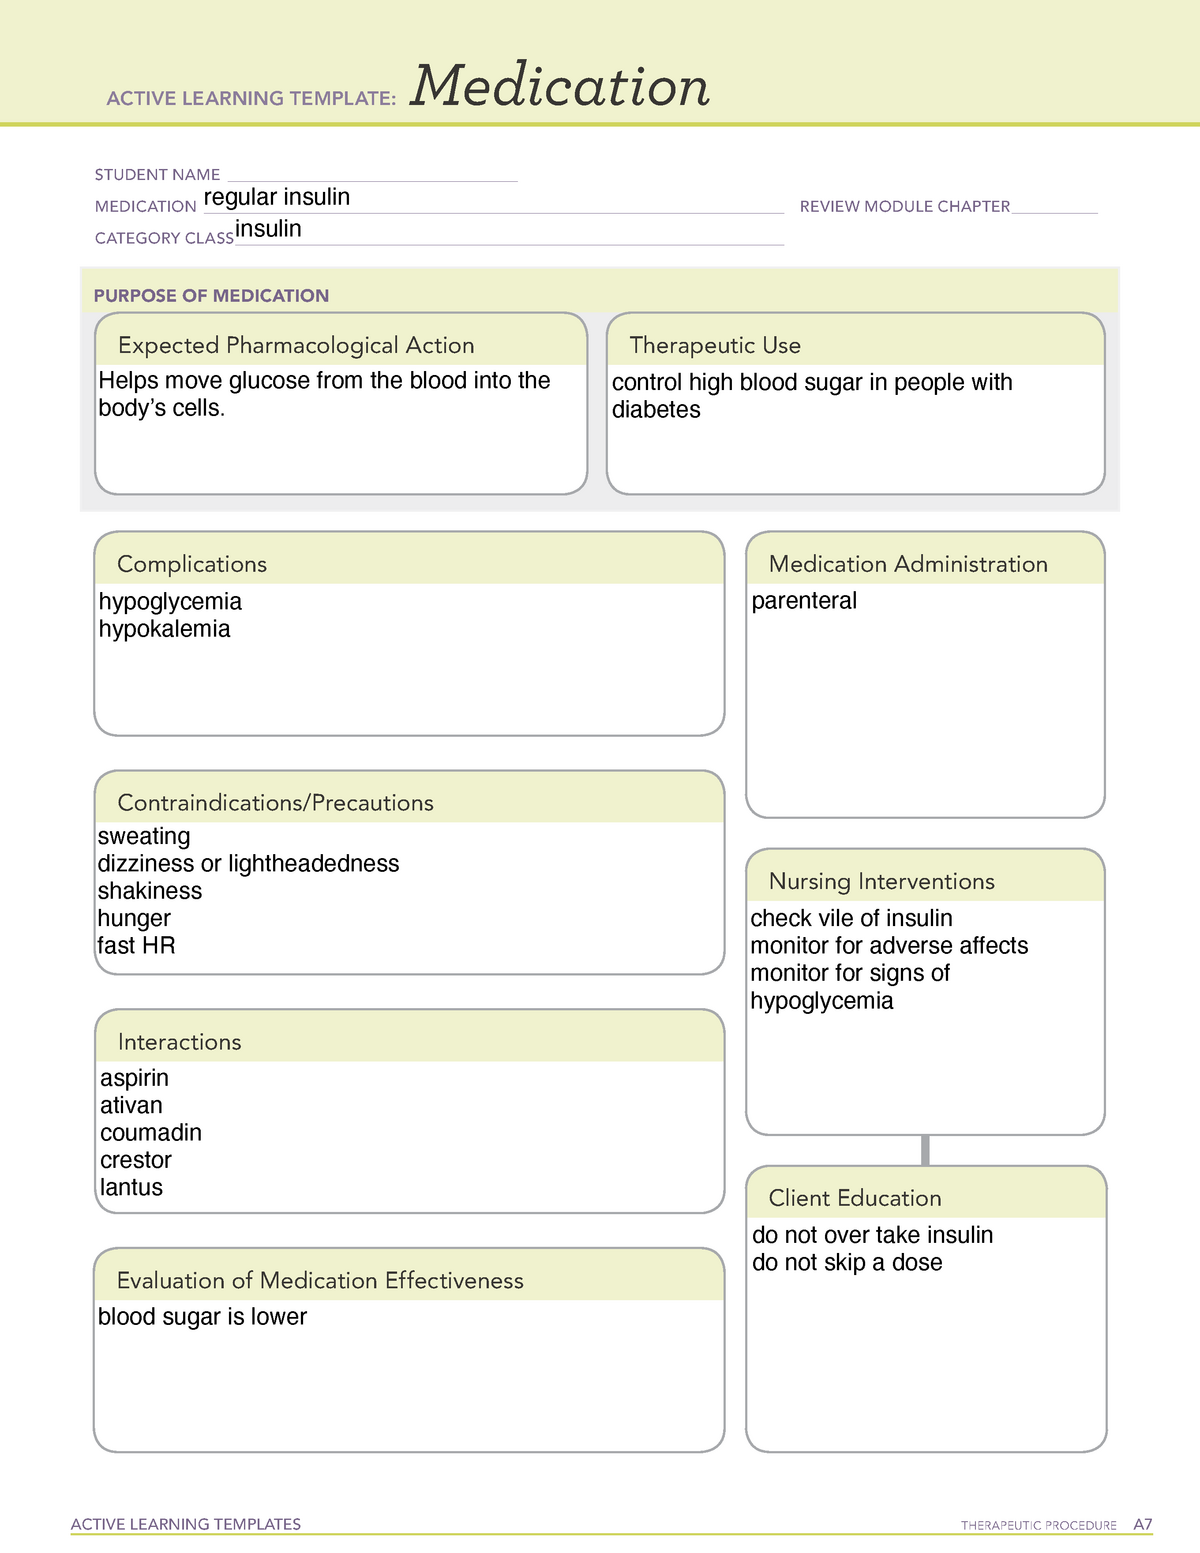 regular-insulin-medication-ati-template-active-learning-templates